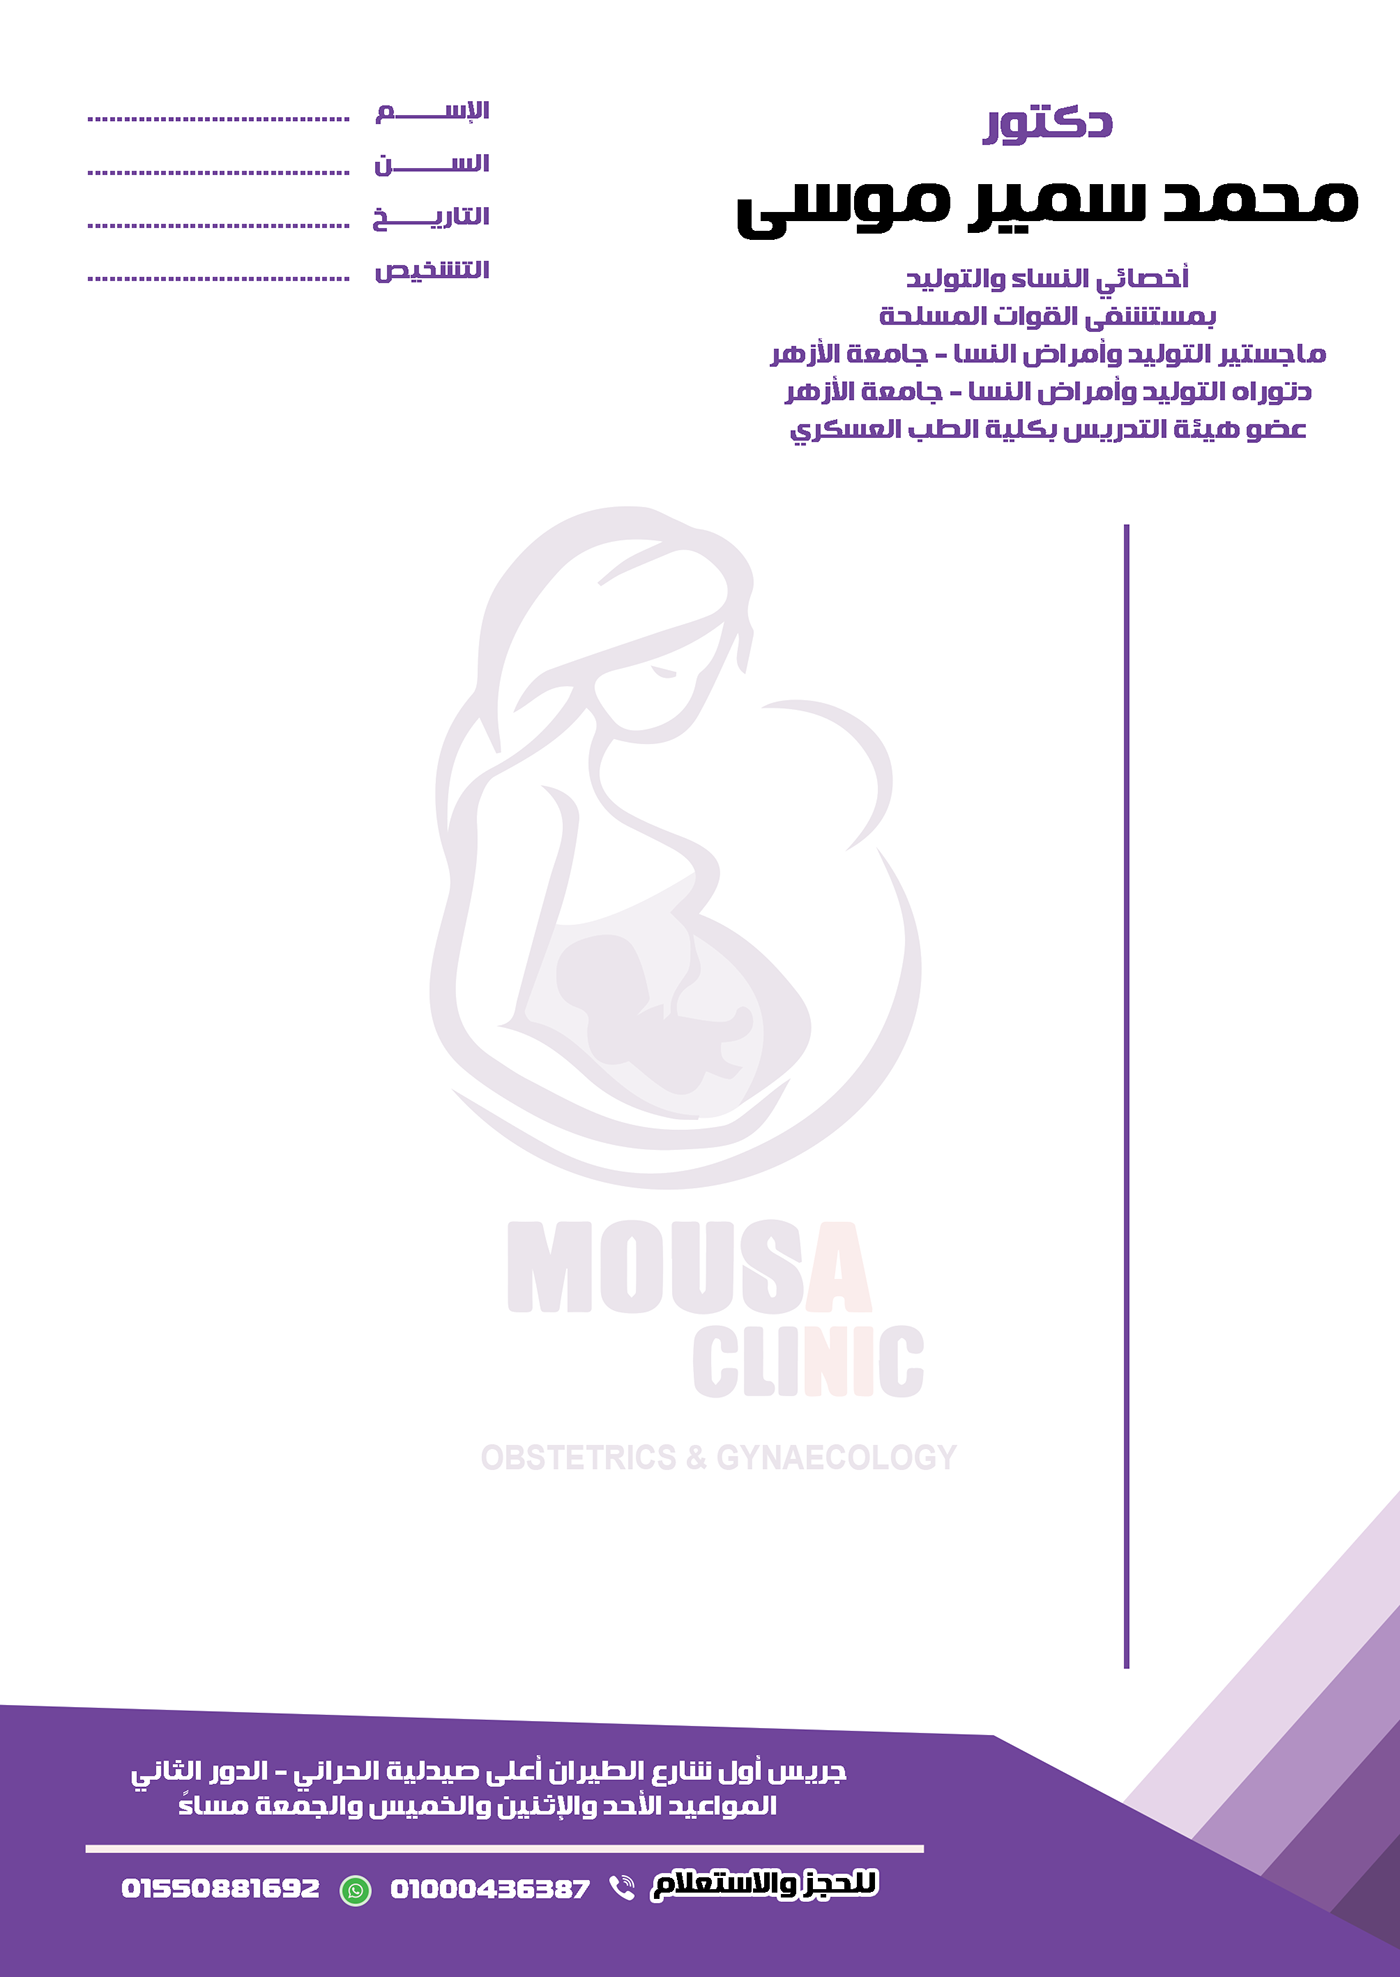 prescription design designer designs Advertising  marketing   clinic midical doctor gynecology and obstetrics